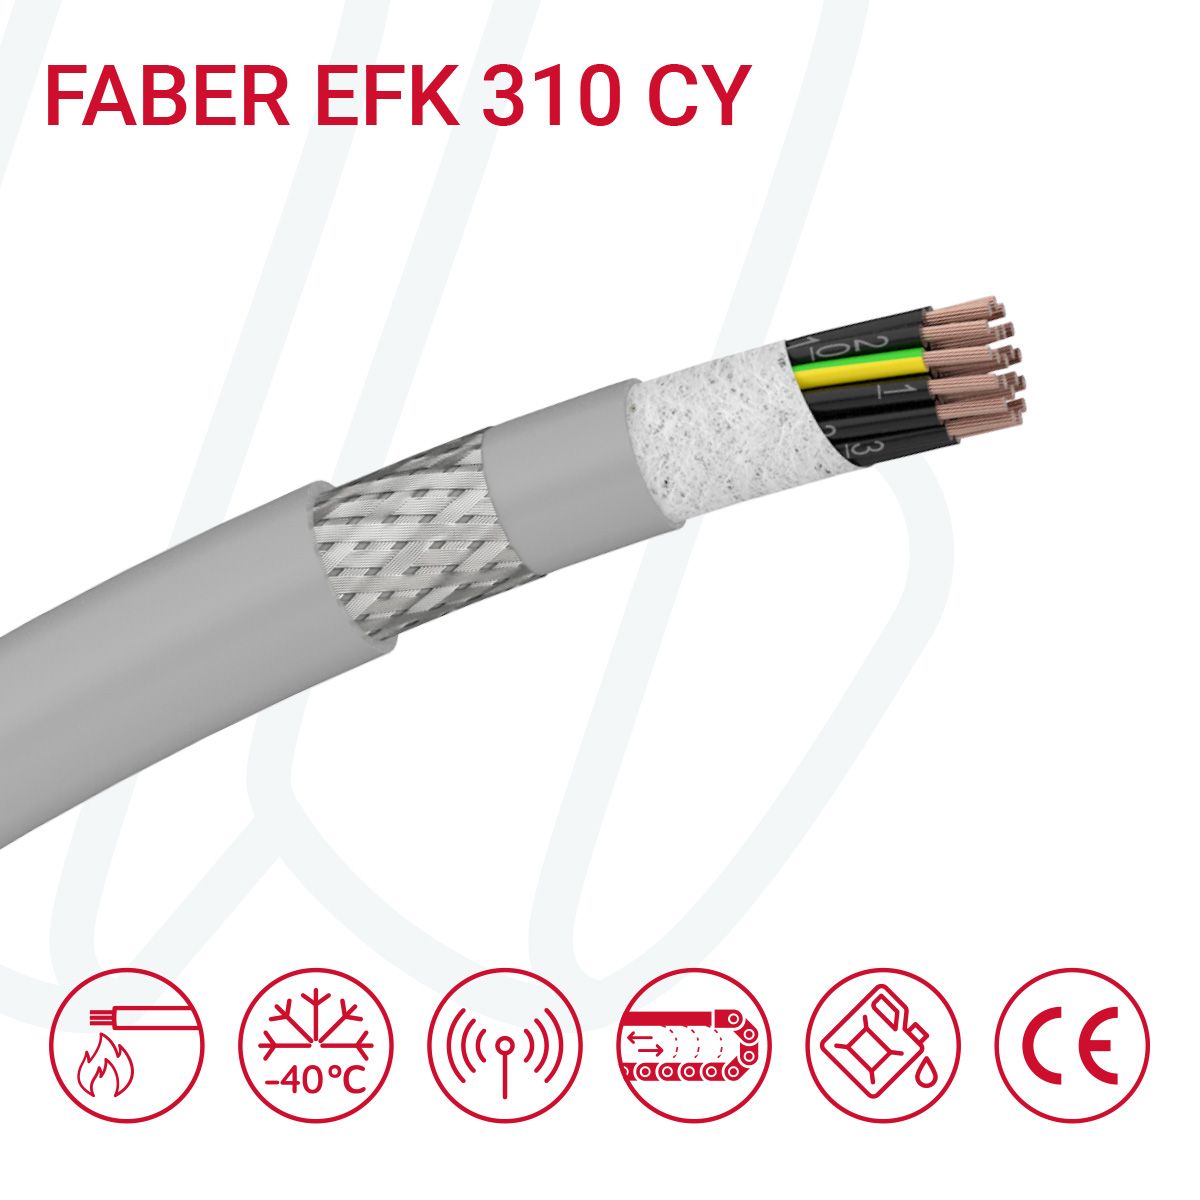 Кабель FABER EFK 310 CY 12G1 cUL сірий, 12, 1.0